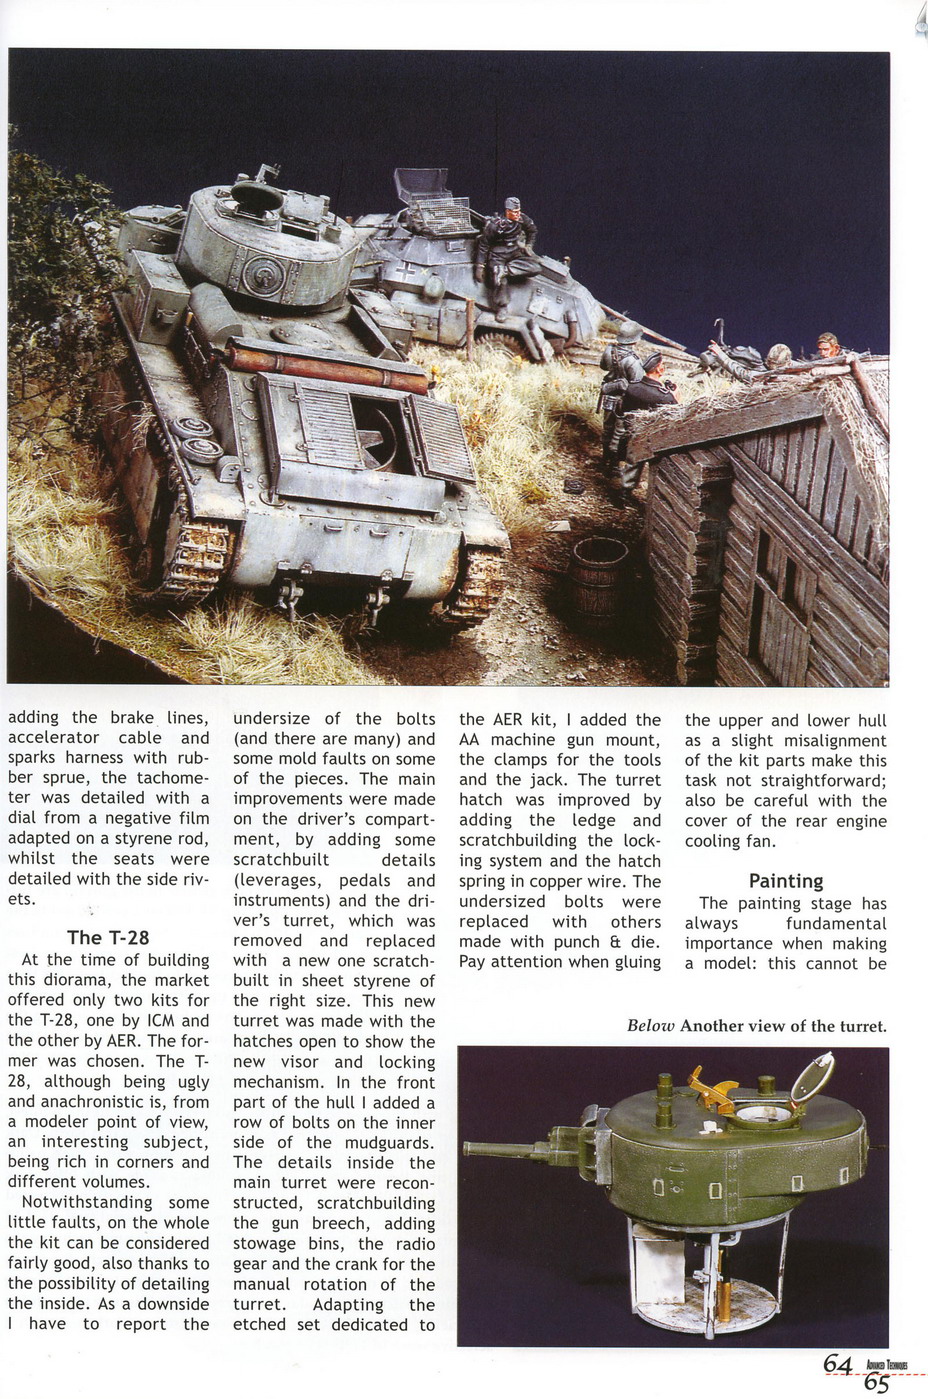 Painting & Weathering Military Vehicles (64).JPG